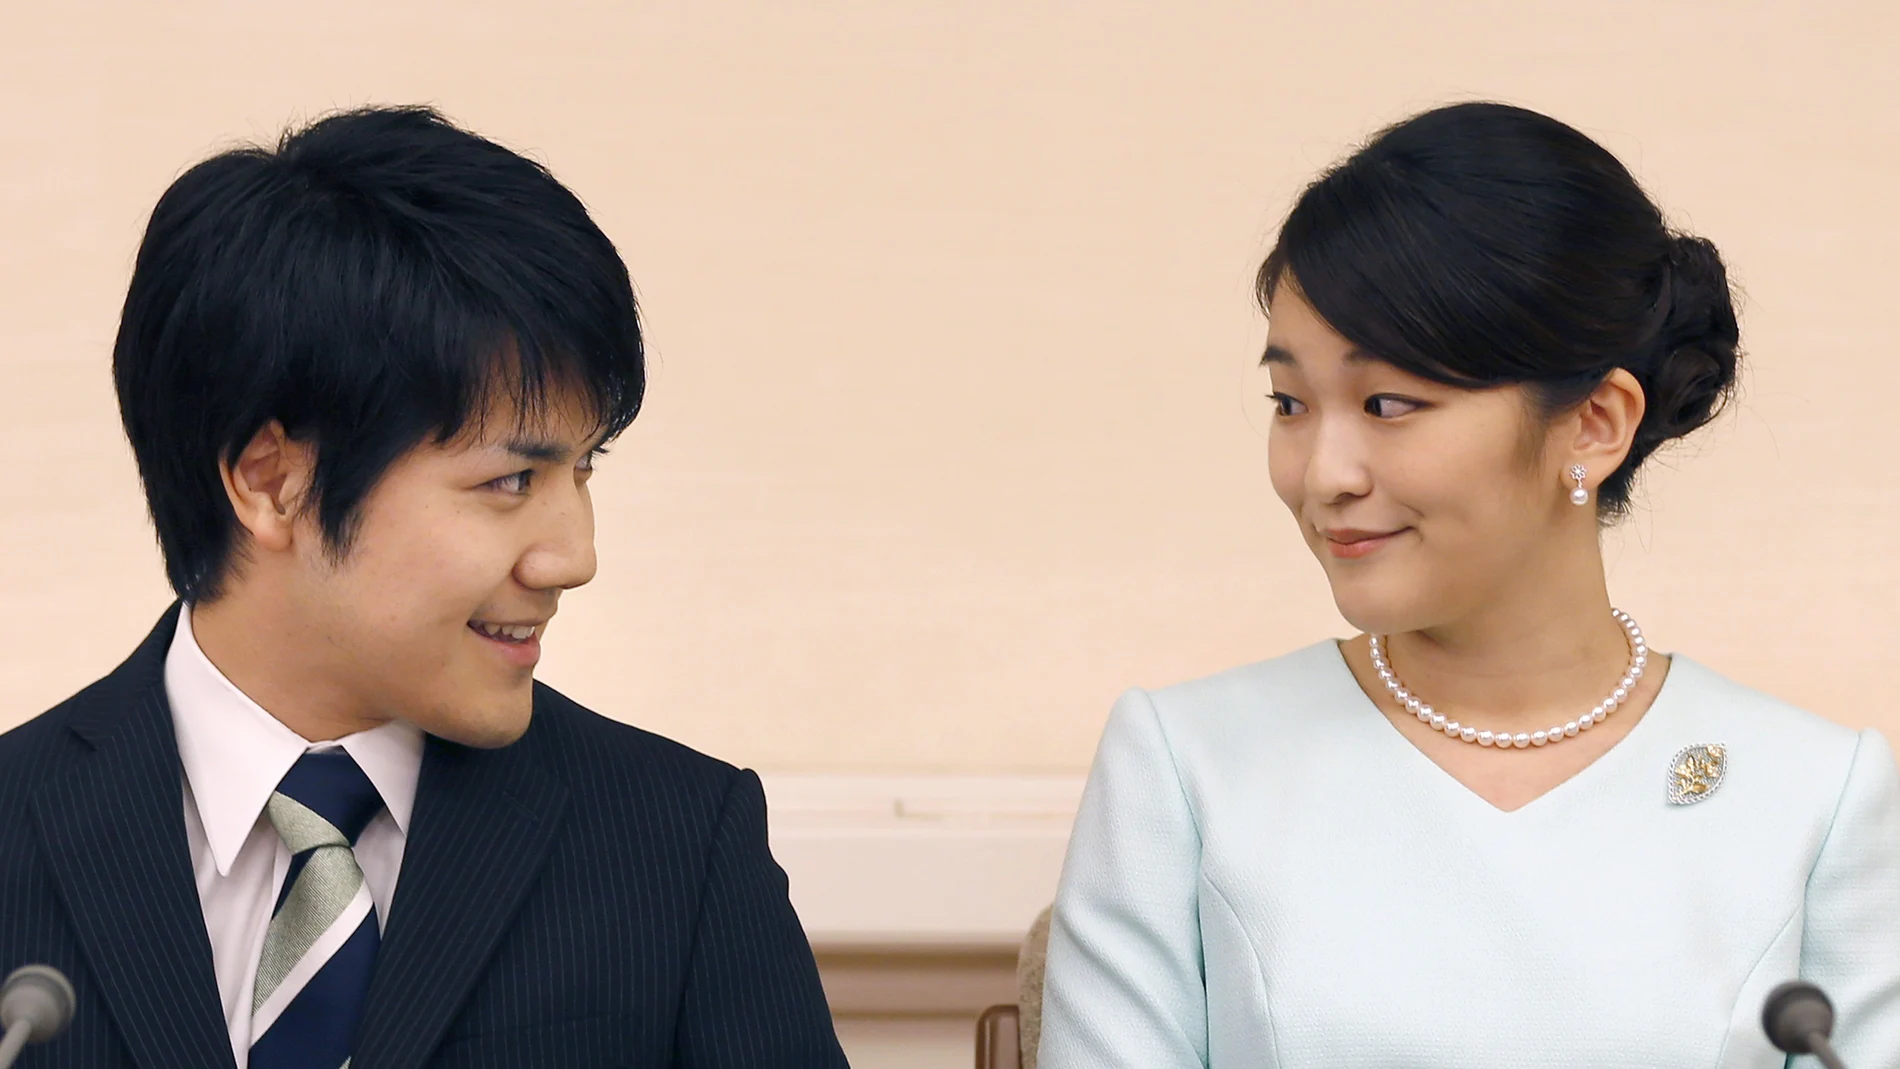 La princesa Mako y su prometido Kei Komuro contraerán matrimonio el próximo 26 de octubre (AP Photo/Shizuo Kambayashi, Pool, File)